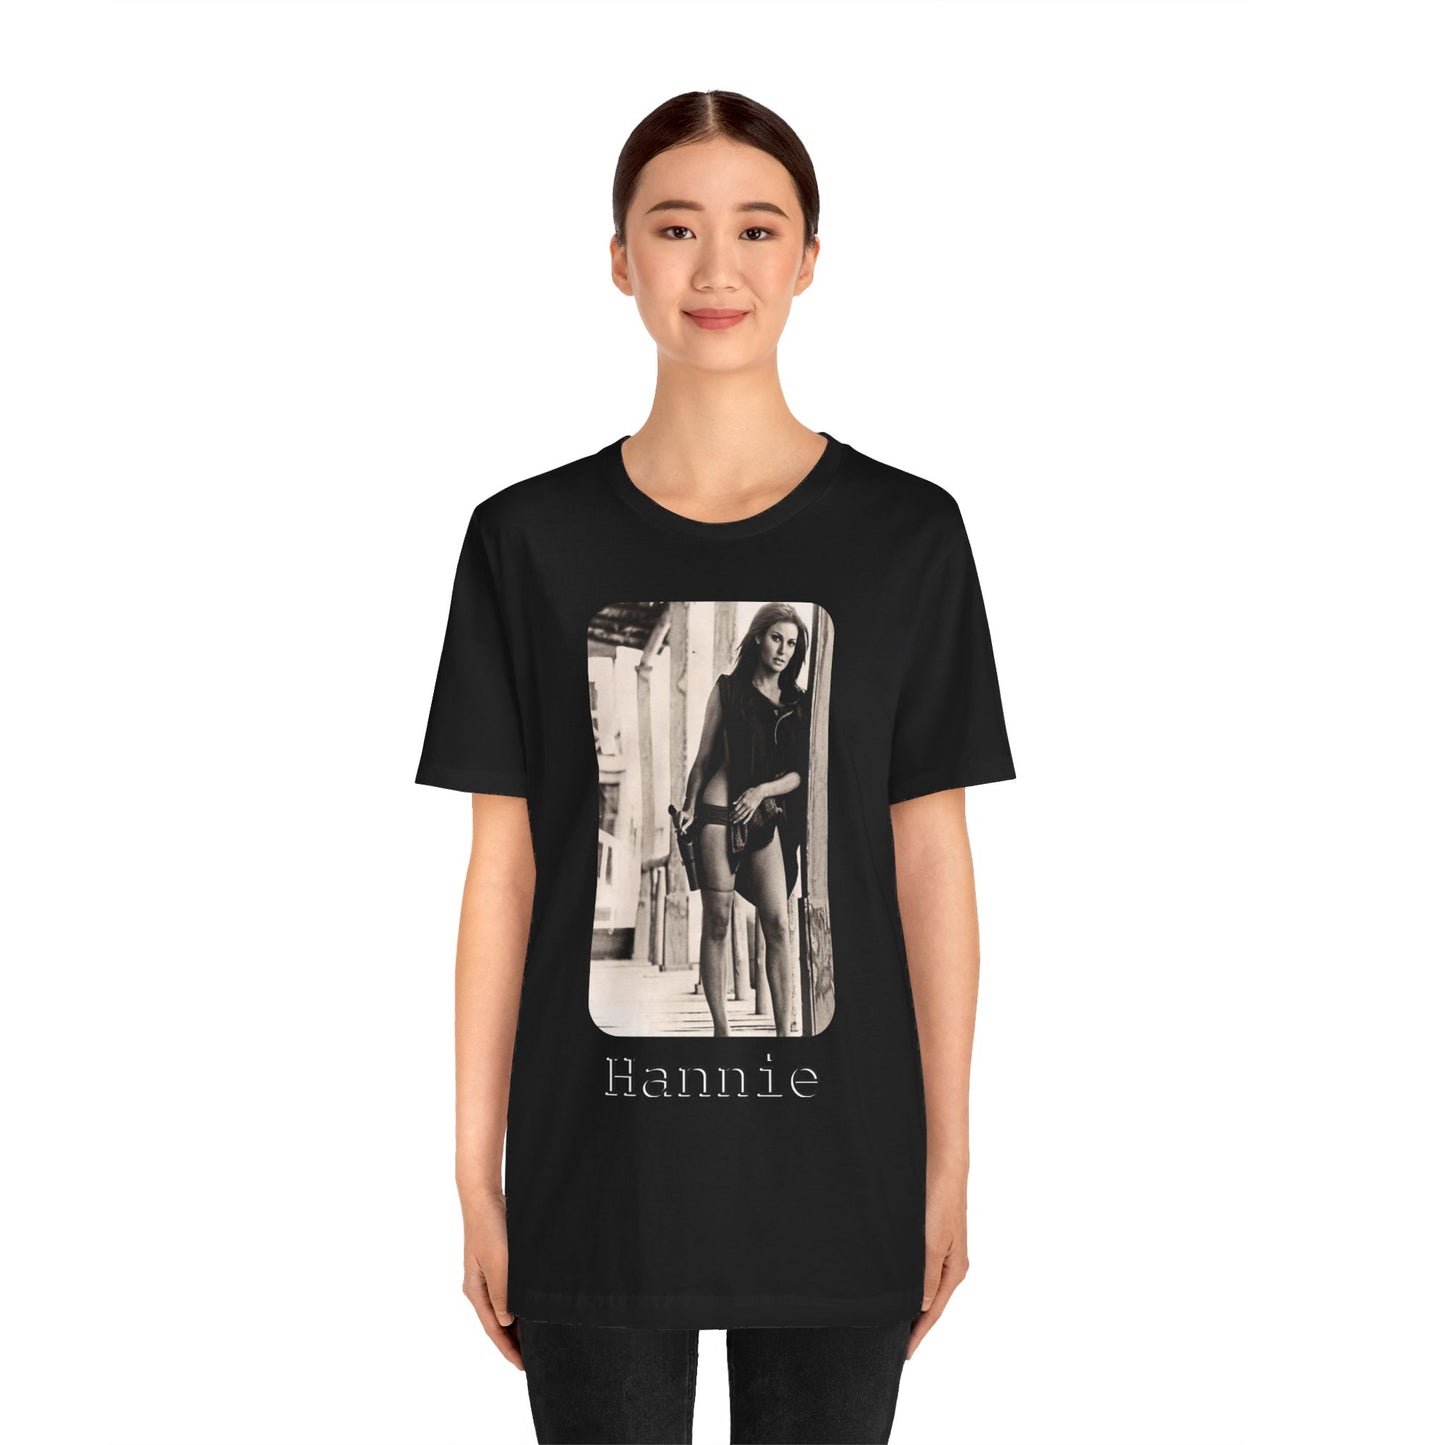 Hannie - Hemingway Line - Hurts Shirts Collection